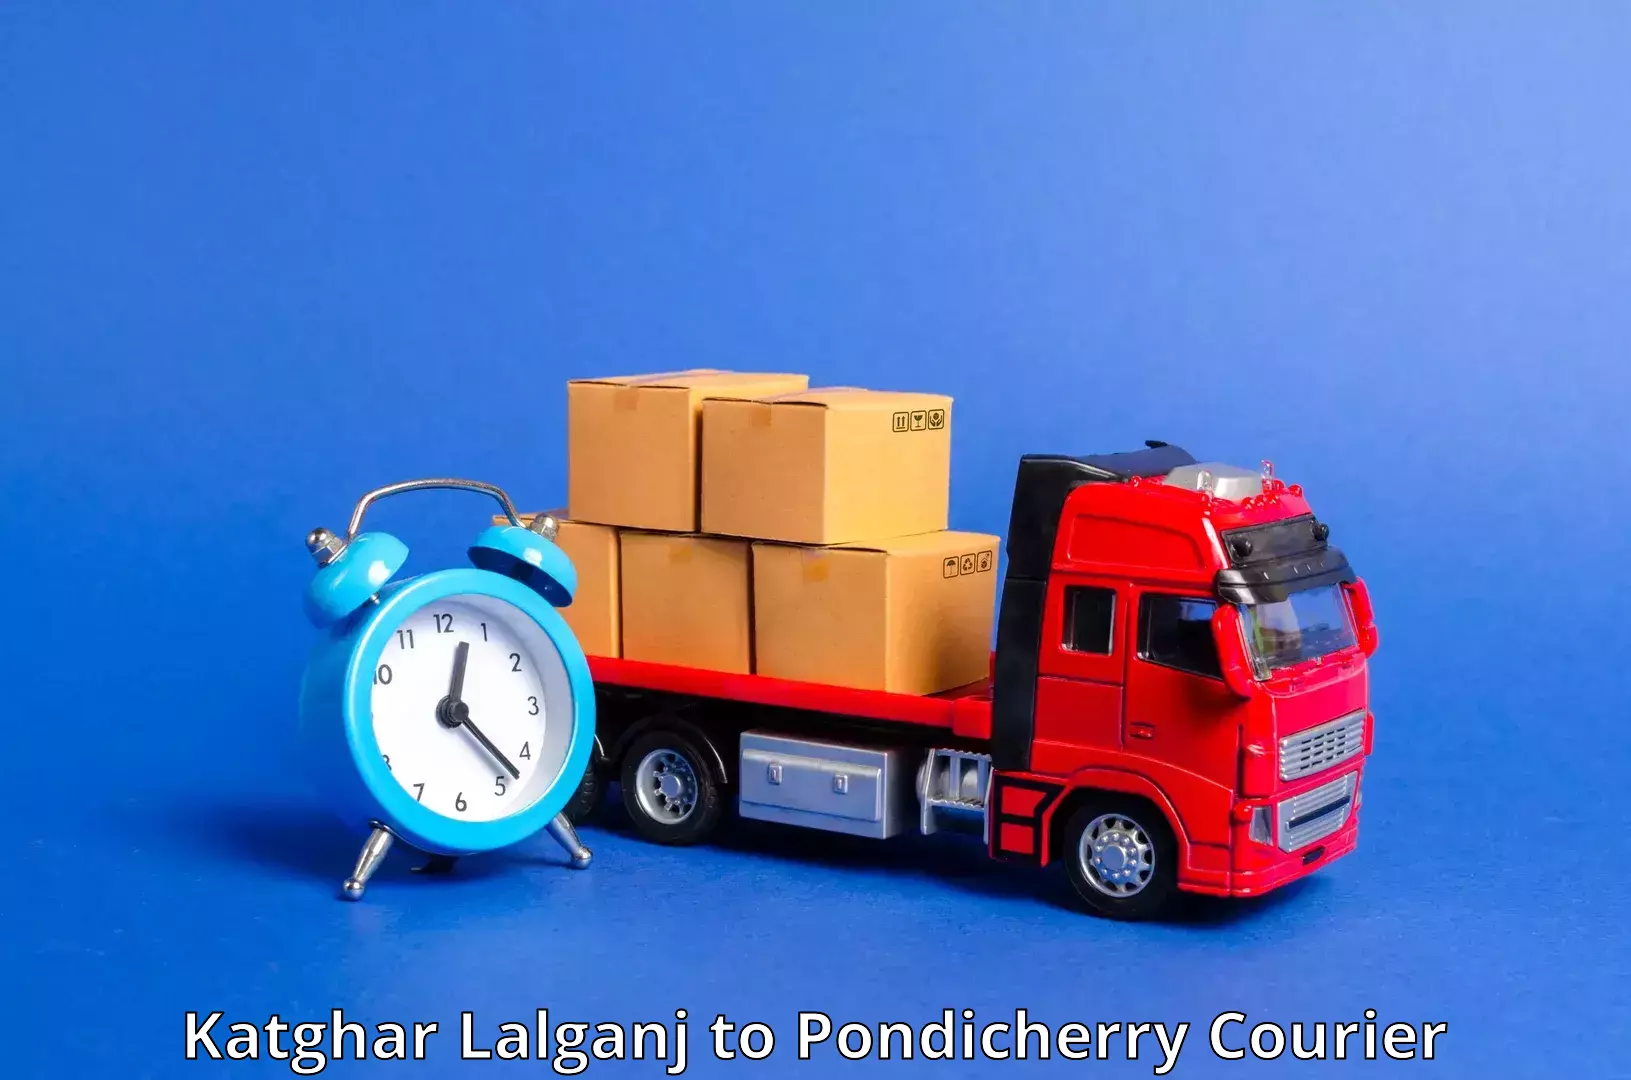 Express delivery network Katghar Lalganj to Pondicherry